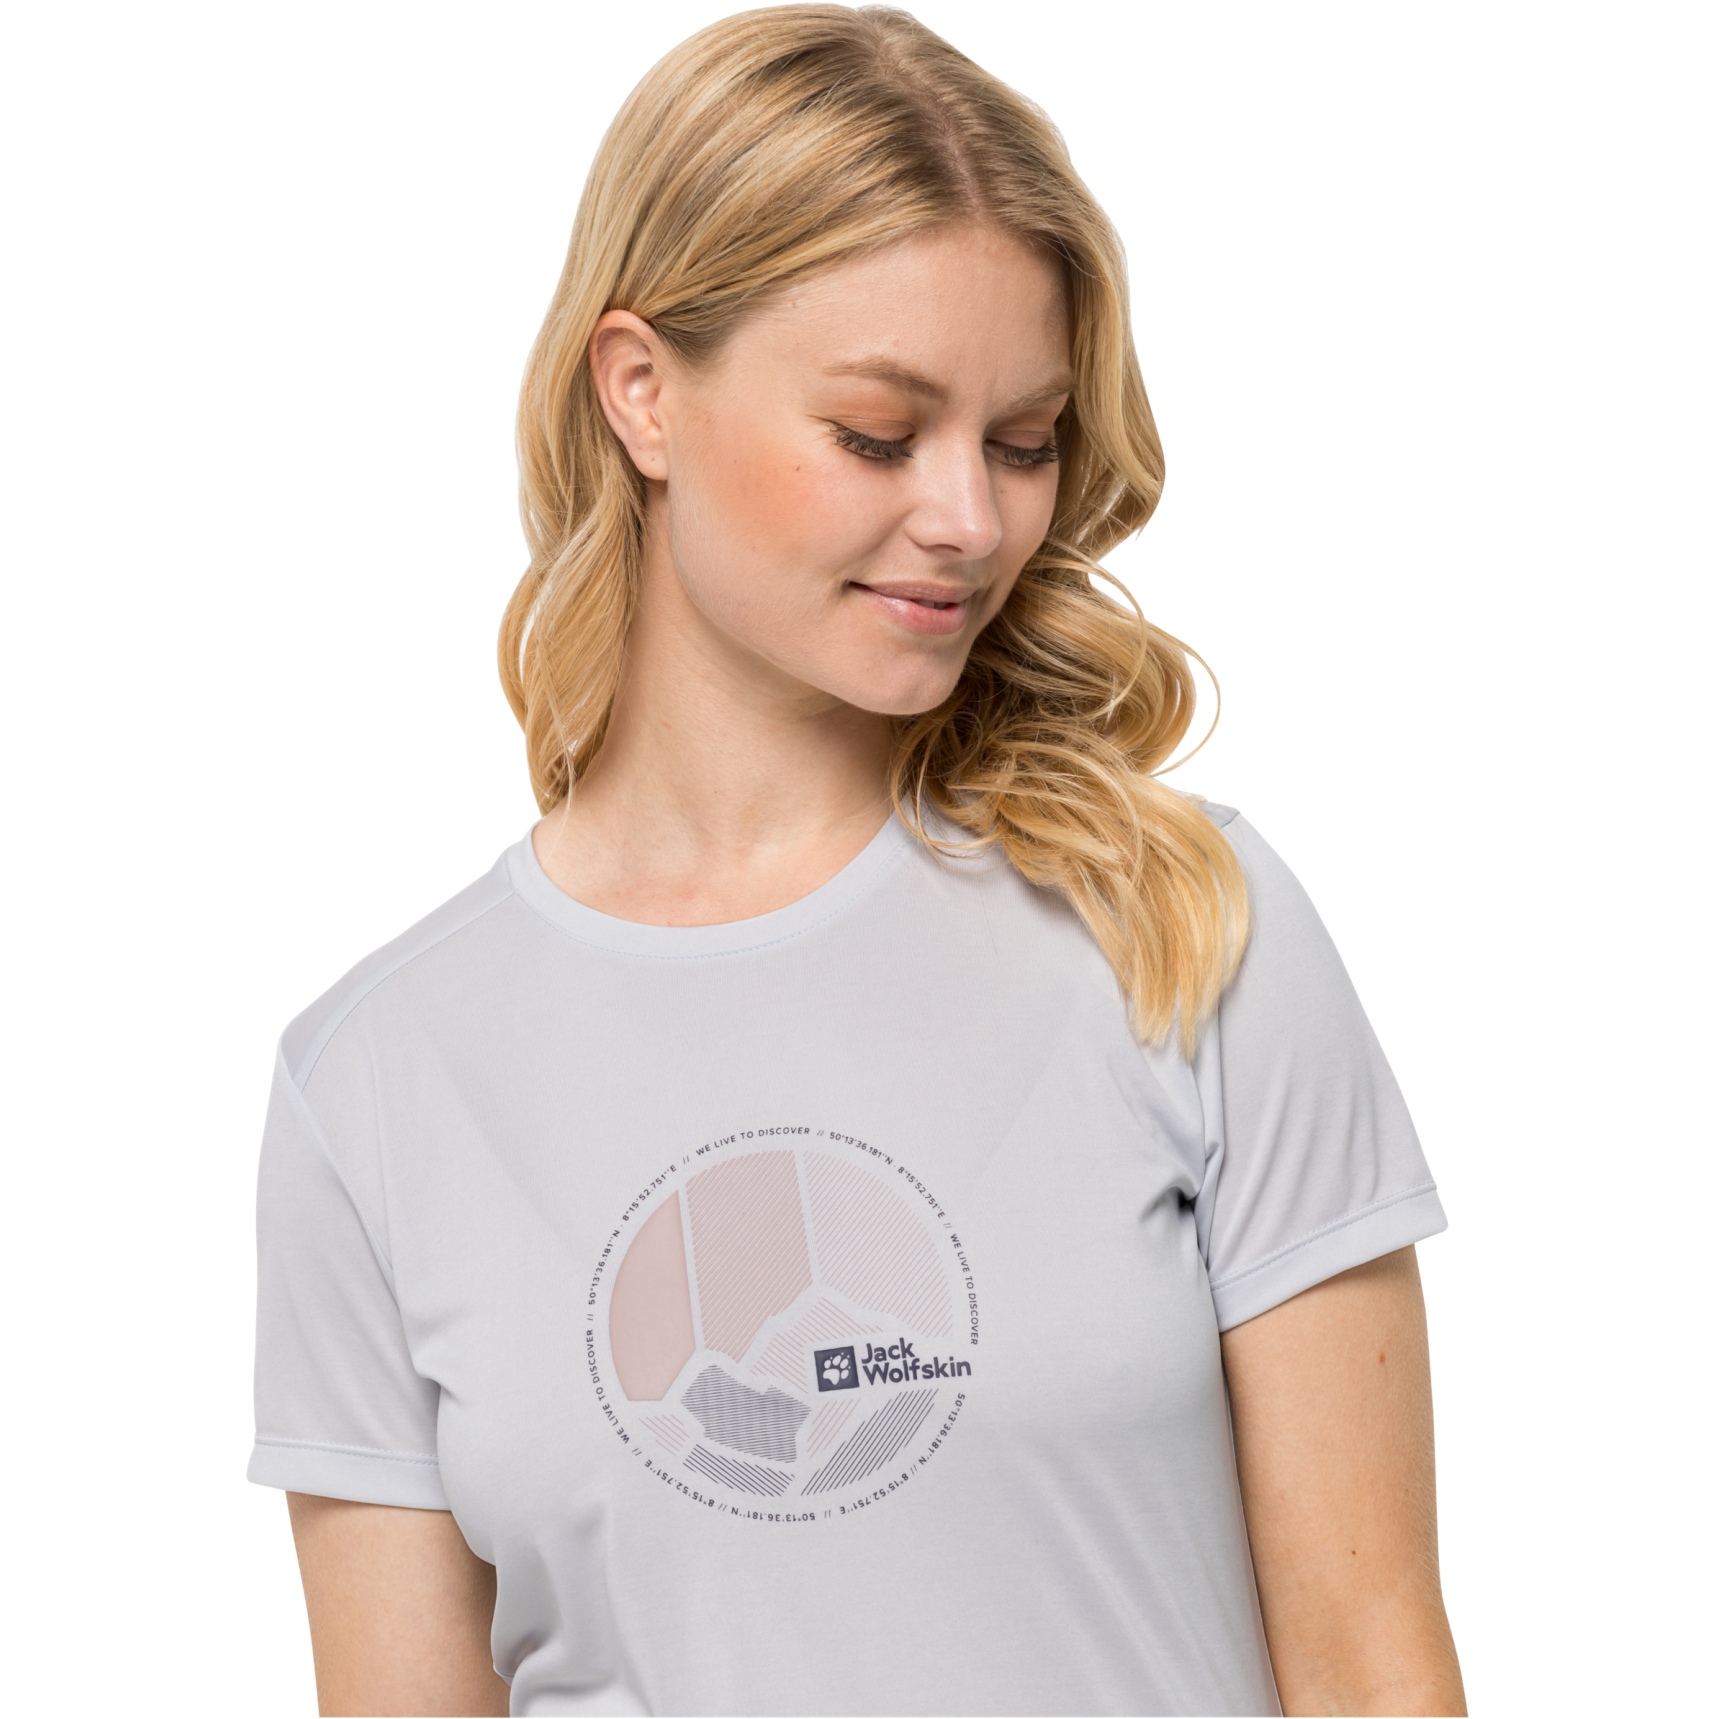 Wolfskin cloud T-Shirt Crosstrail - Damen white Graphic Jack | BIKE24